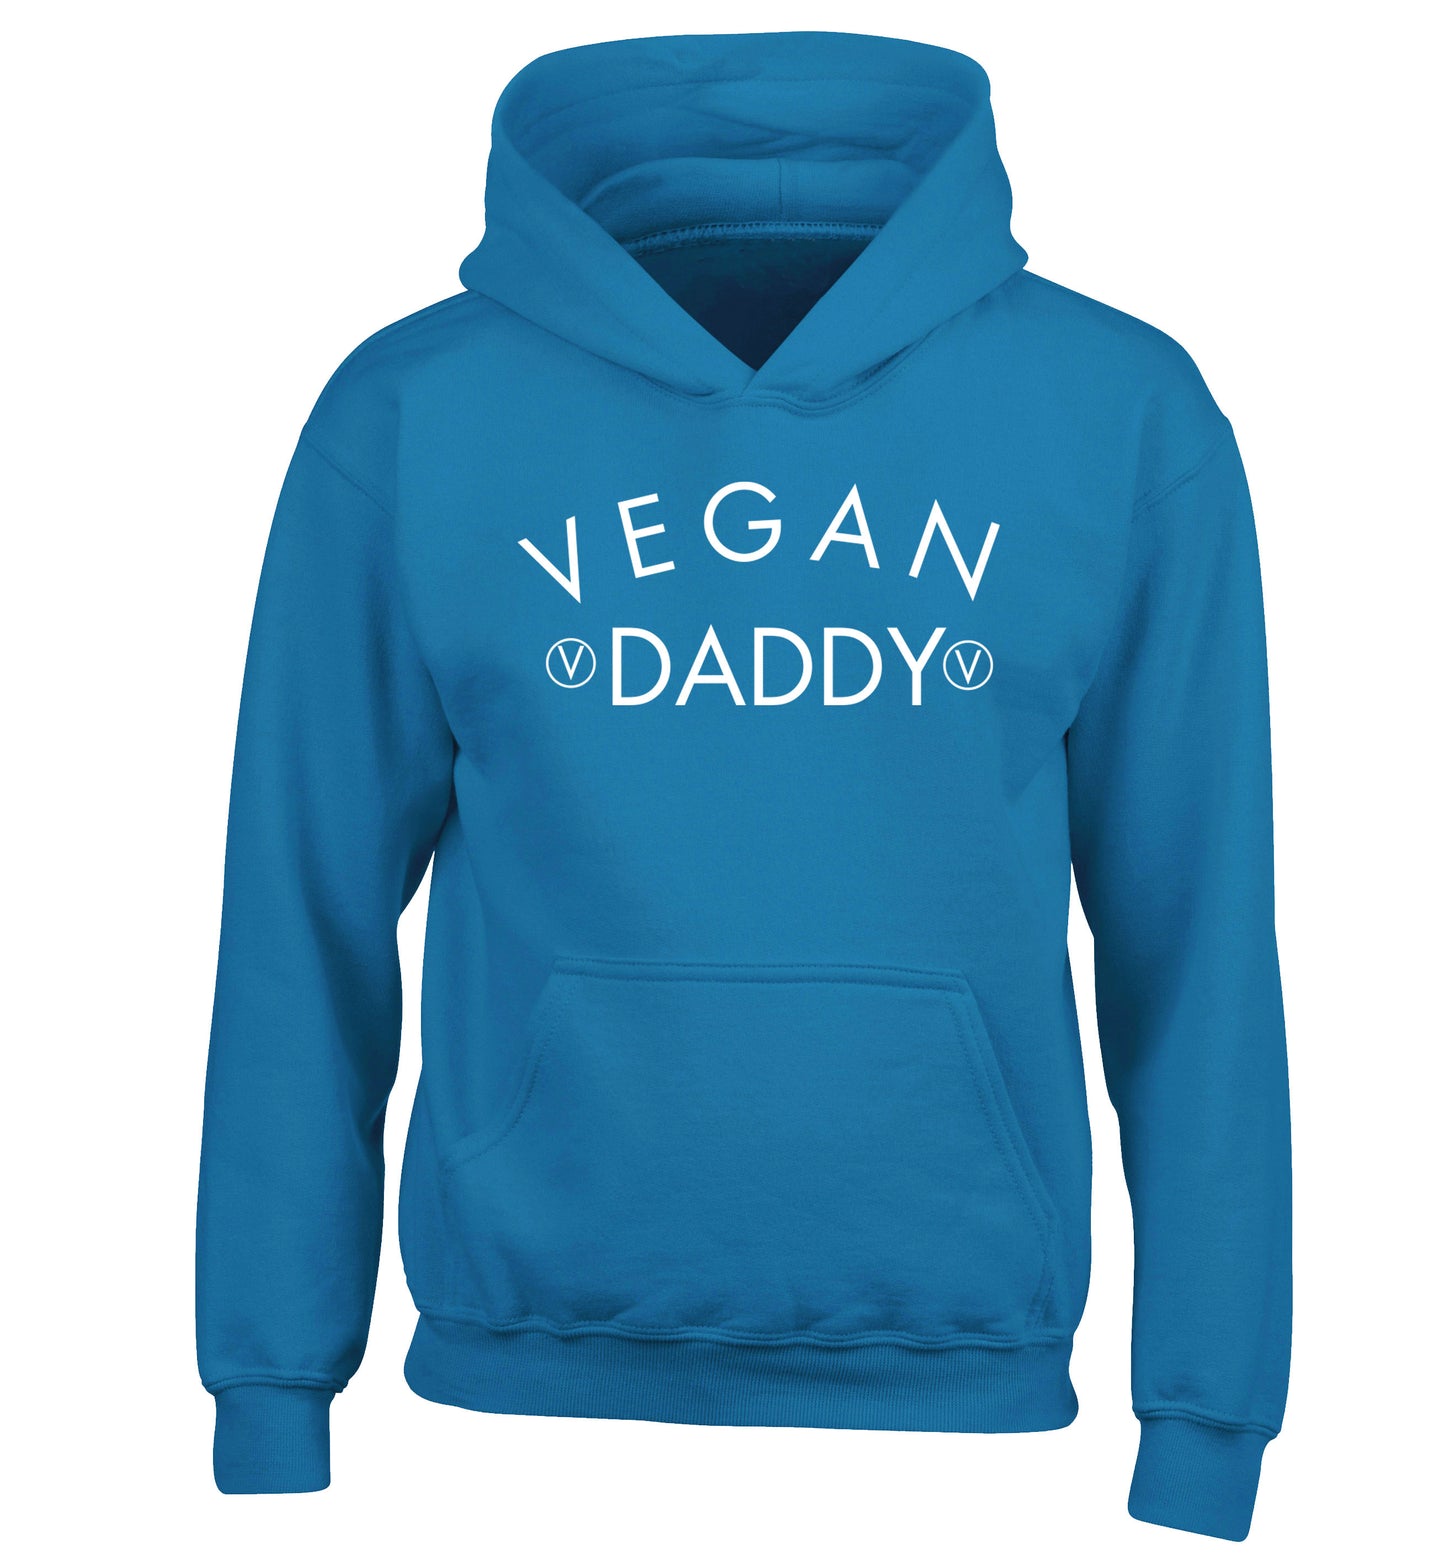 Vegan daddy children's blue hoodie 12-14 Years